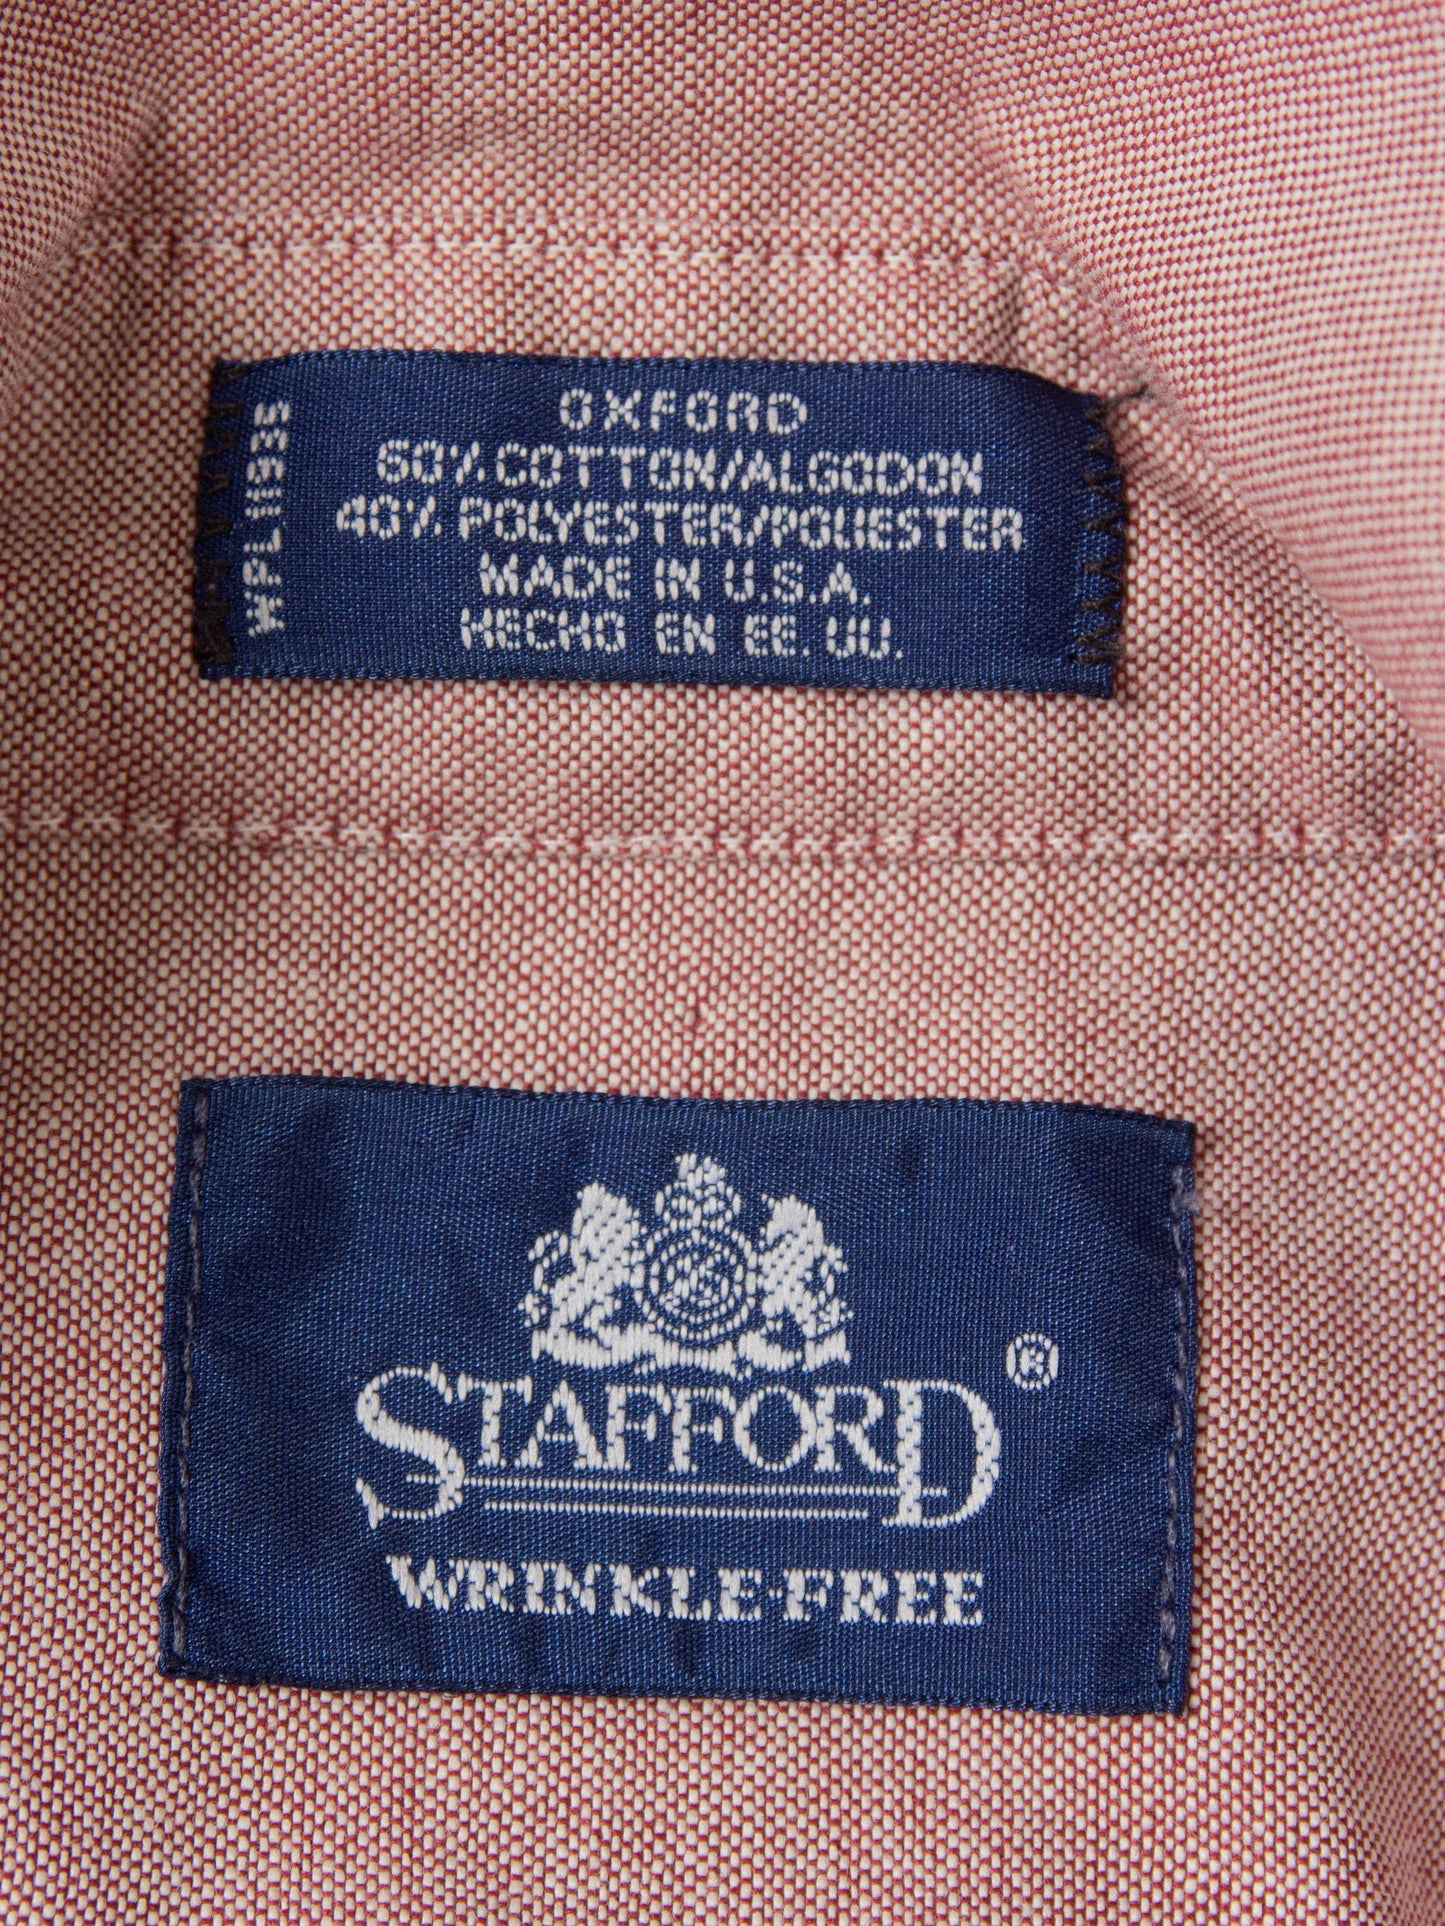 Vtg Stafford Short Sleeve Oxford Shirt - Made in USA (M)